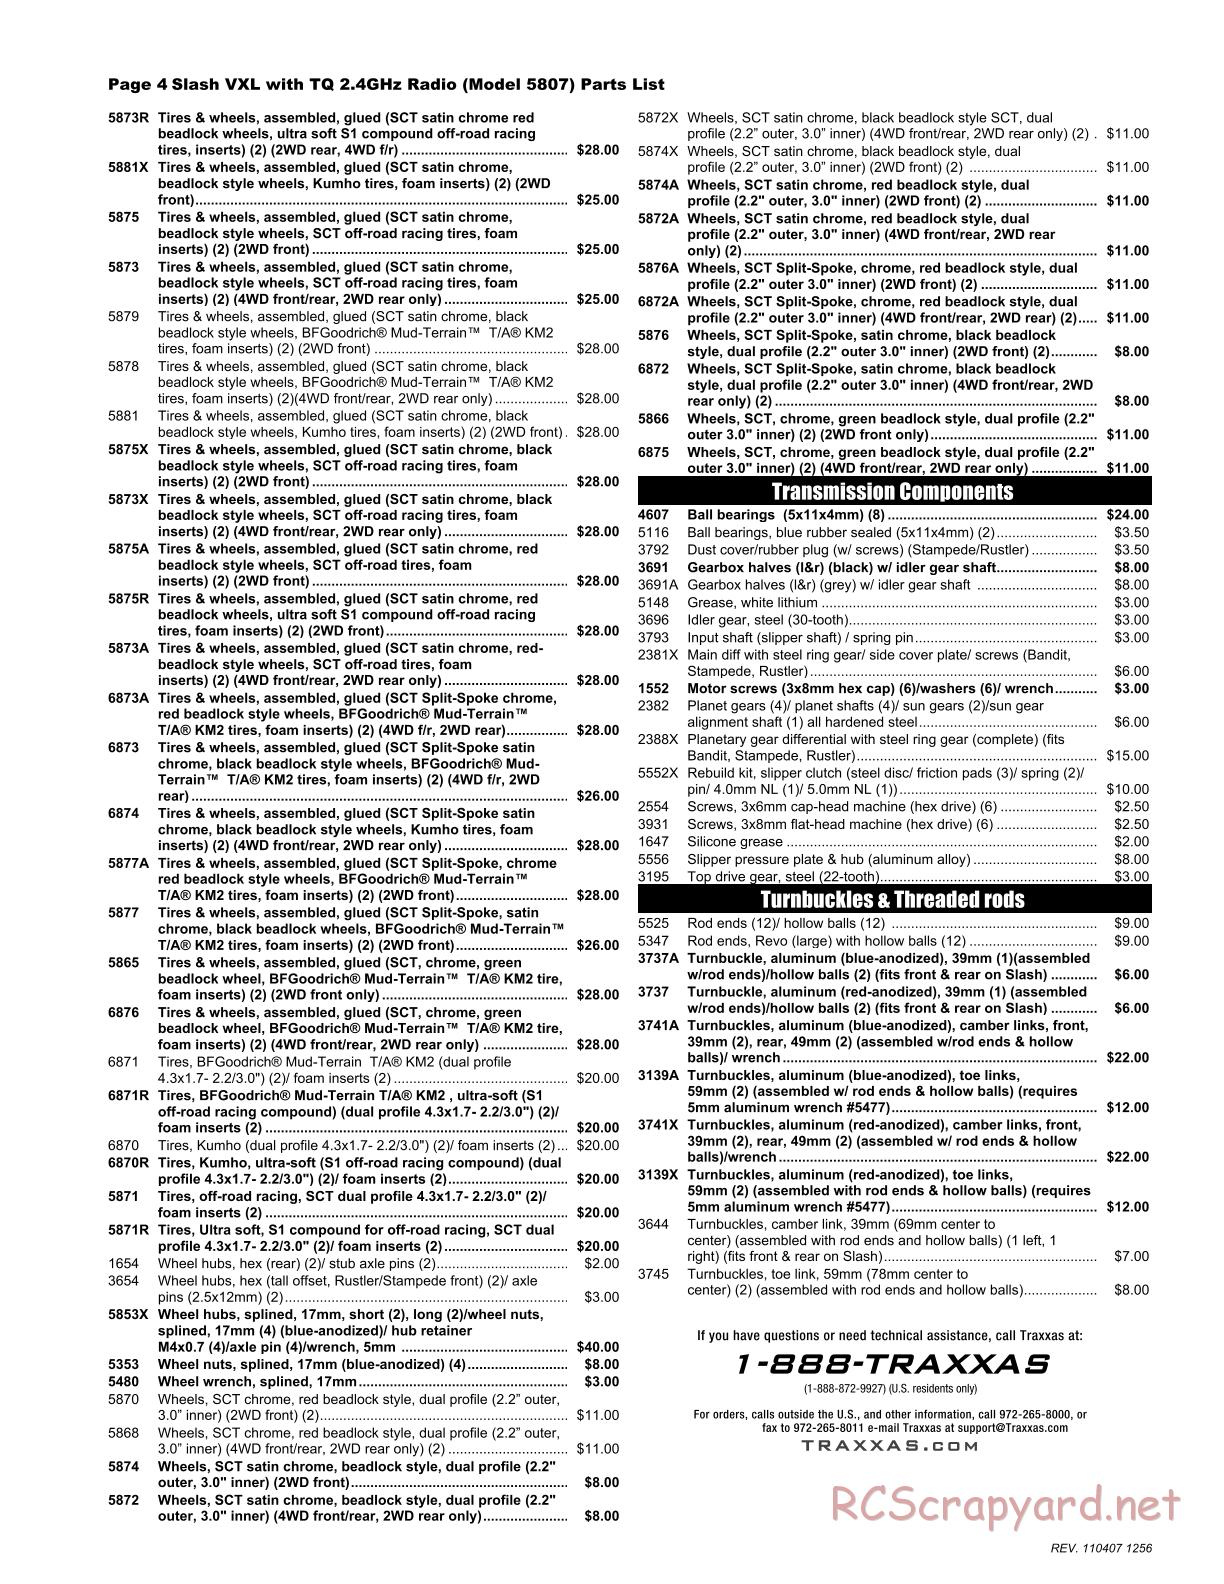 Traxxas - Slash 2WD VXL - Parts List - Page 4